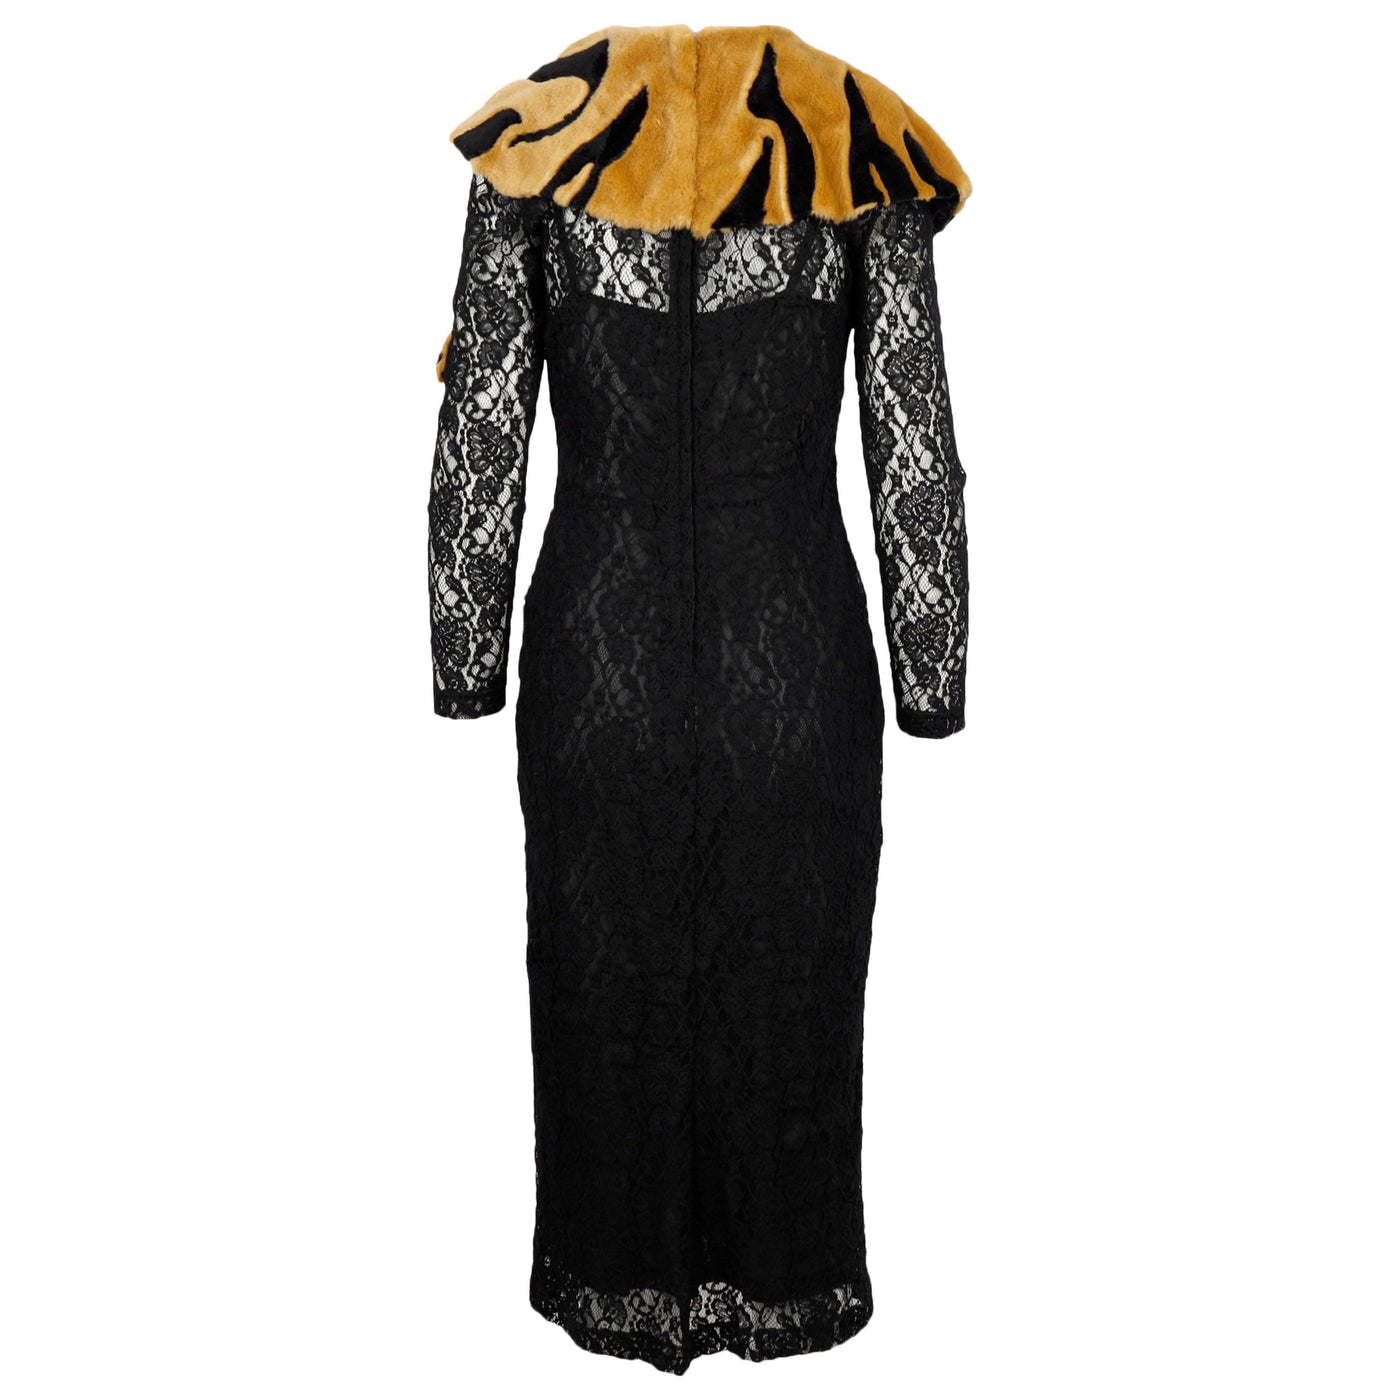 Second hand Dolce & Gabbana Faux Fur Tiger Lace Dress